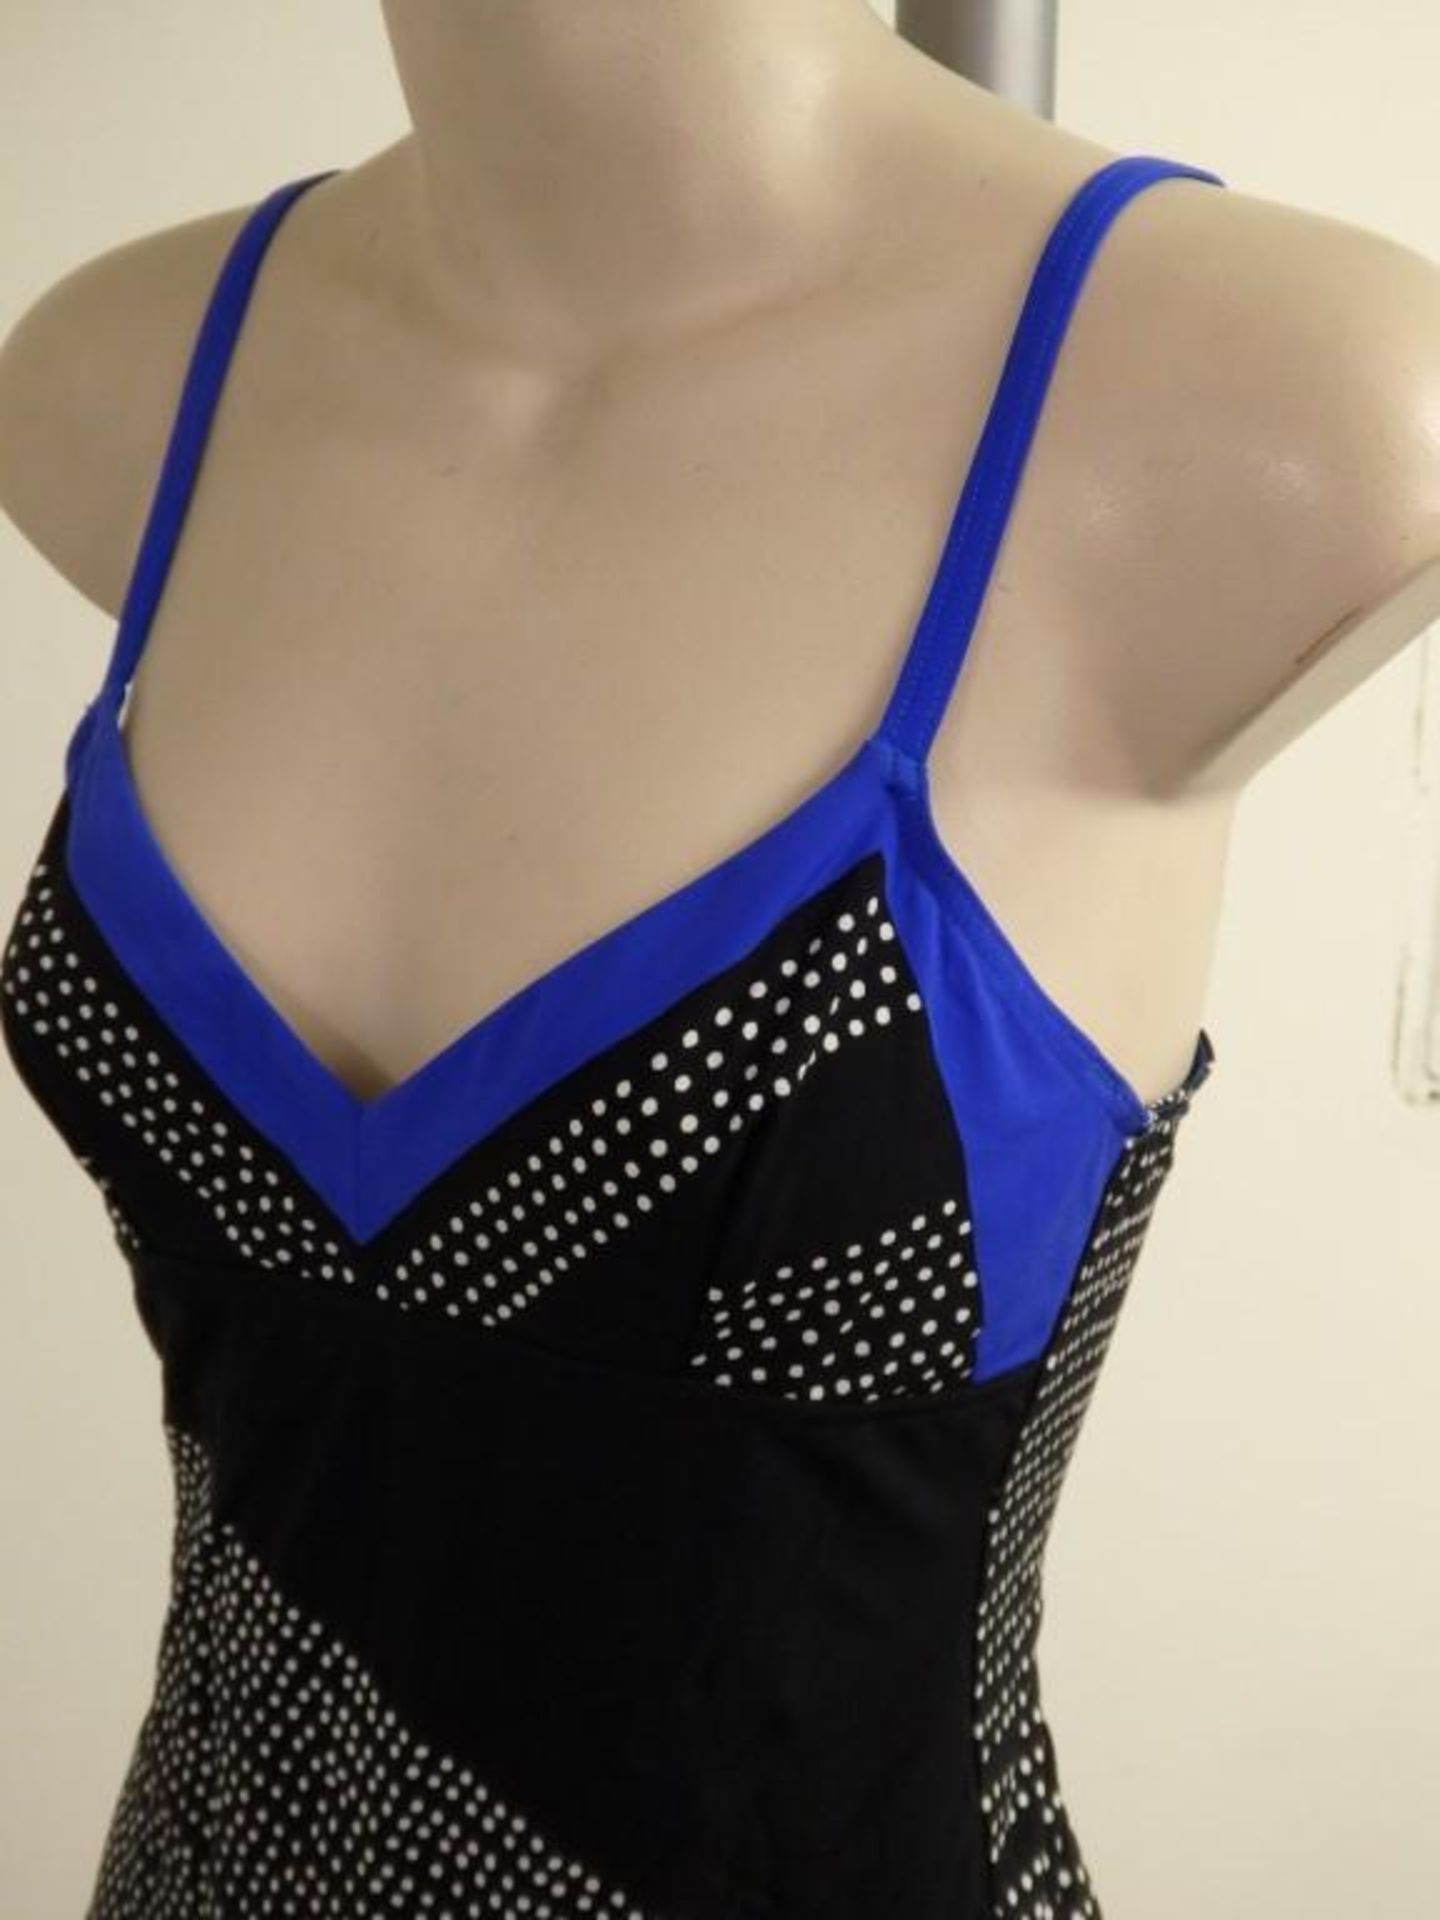 1 x Rasurel - Black Polka dot with royal blue trim &frill Tobago Swimsuit - B21039 - Size 2C - UK 32 - Image 2 of 8